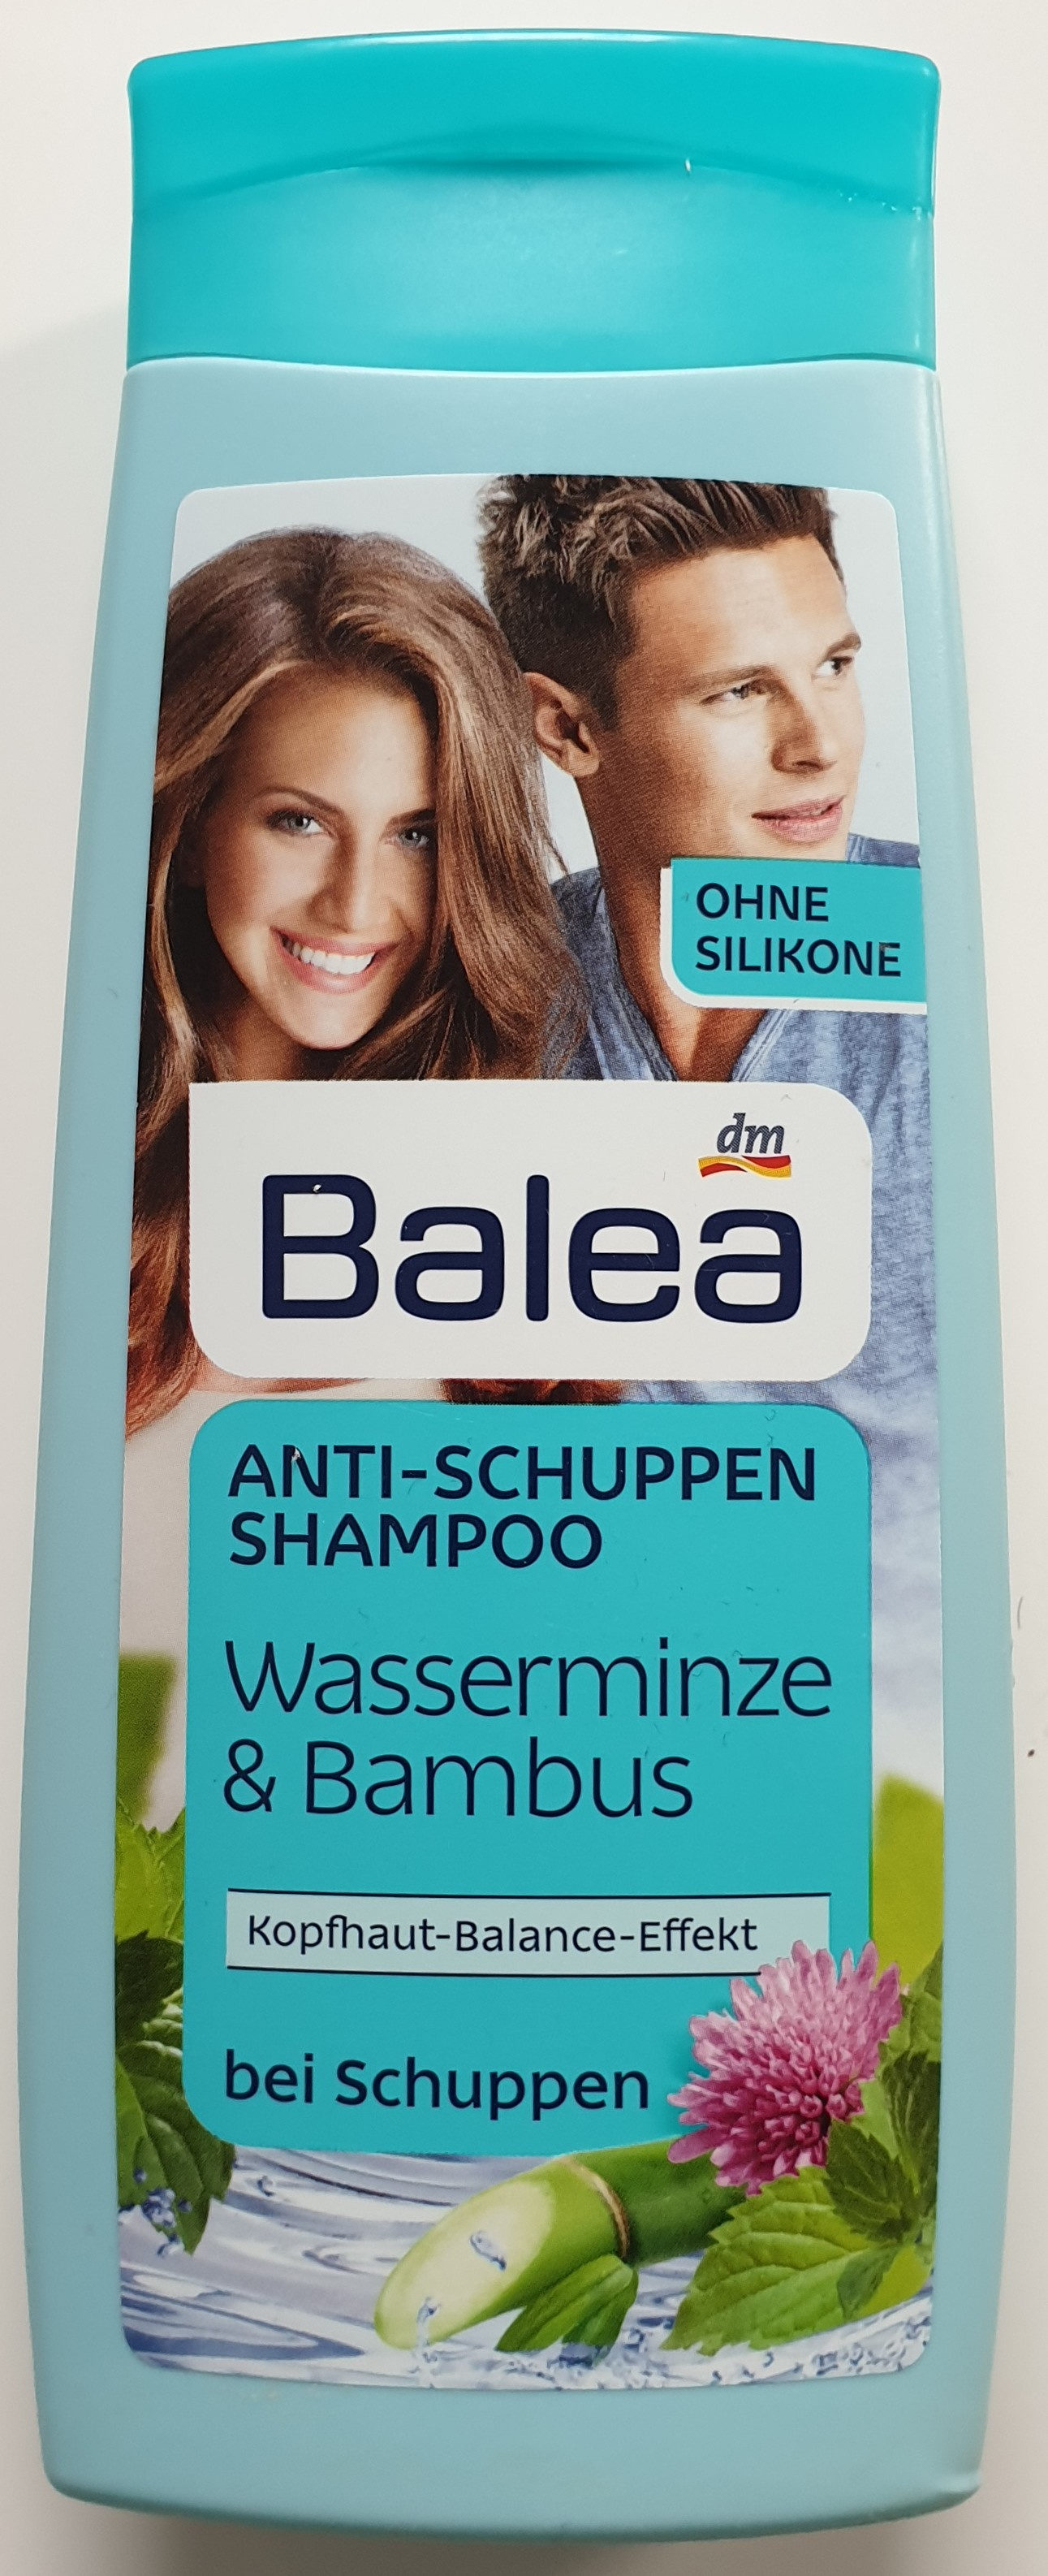 Anti-Schuppen Shampoo Wasserminze & Bambus - Product - de